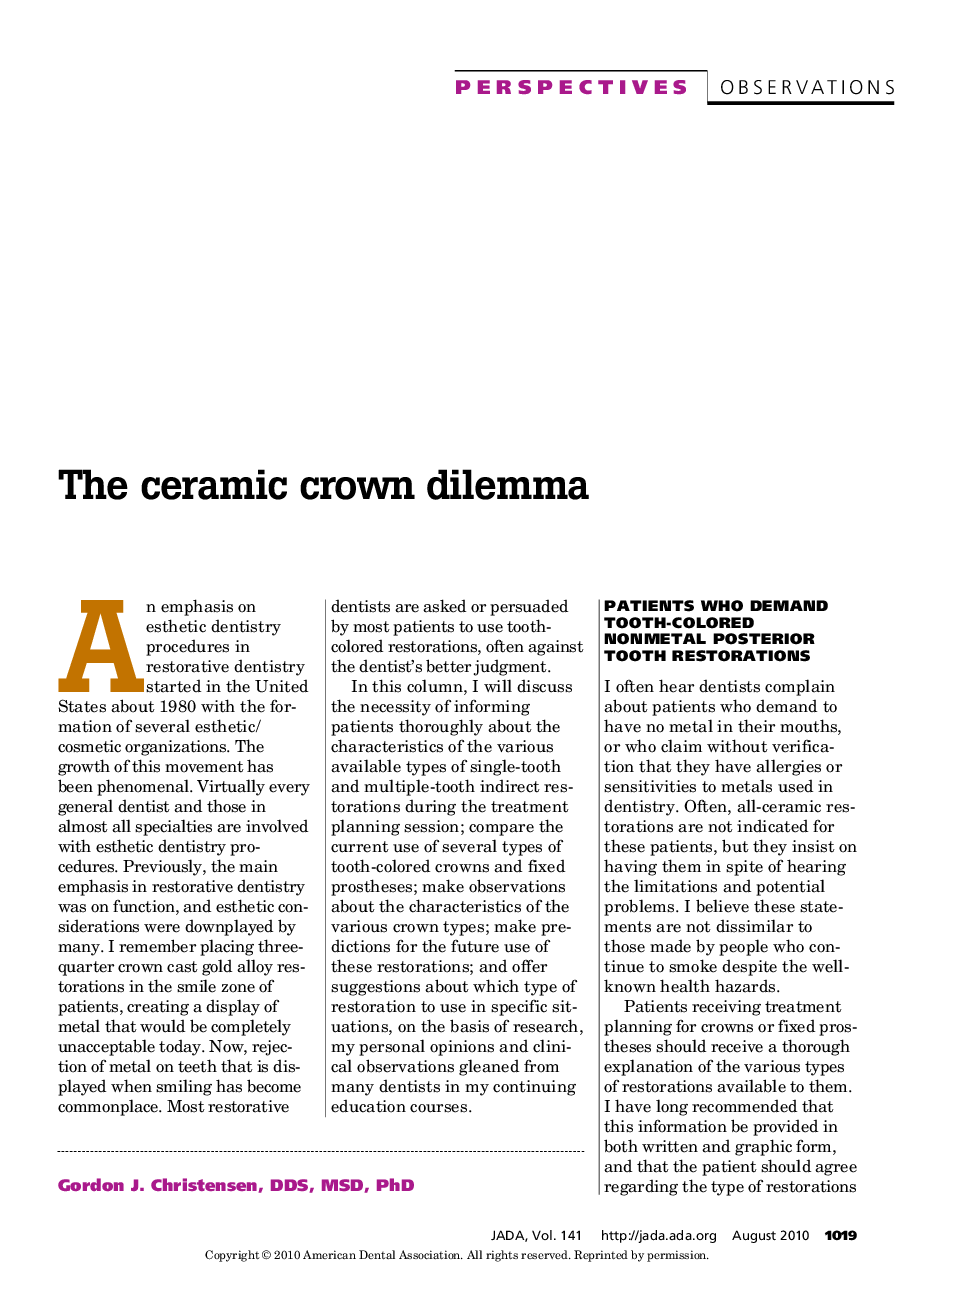 The Ceramic Crown Dilemma